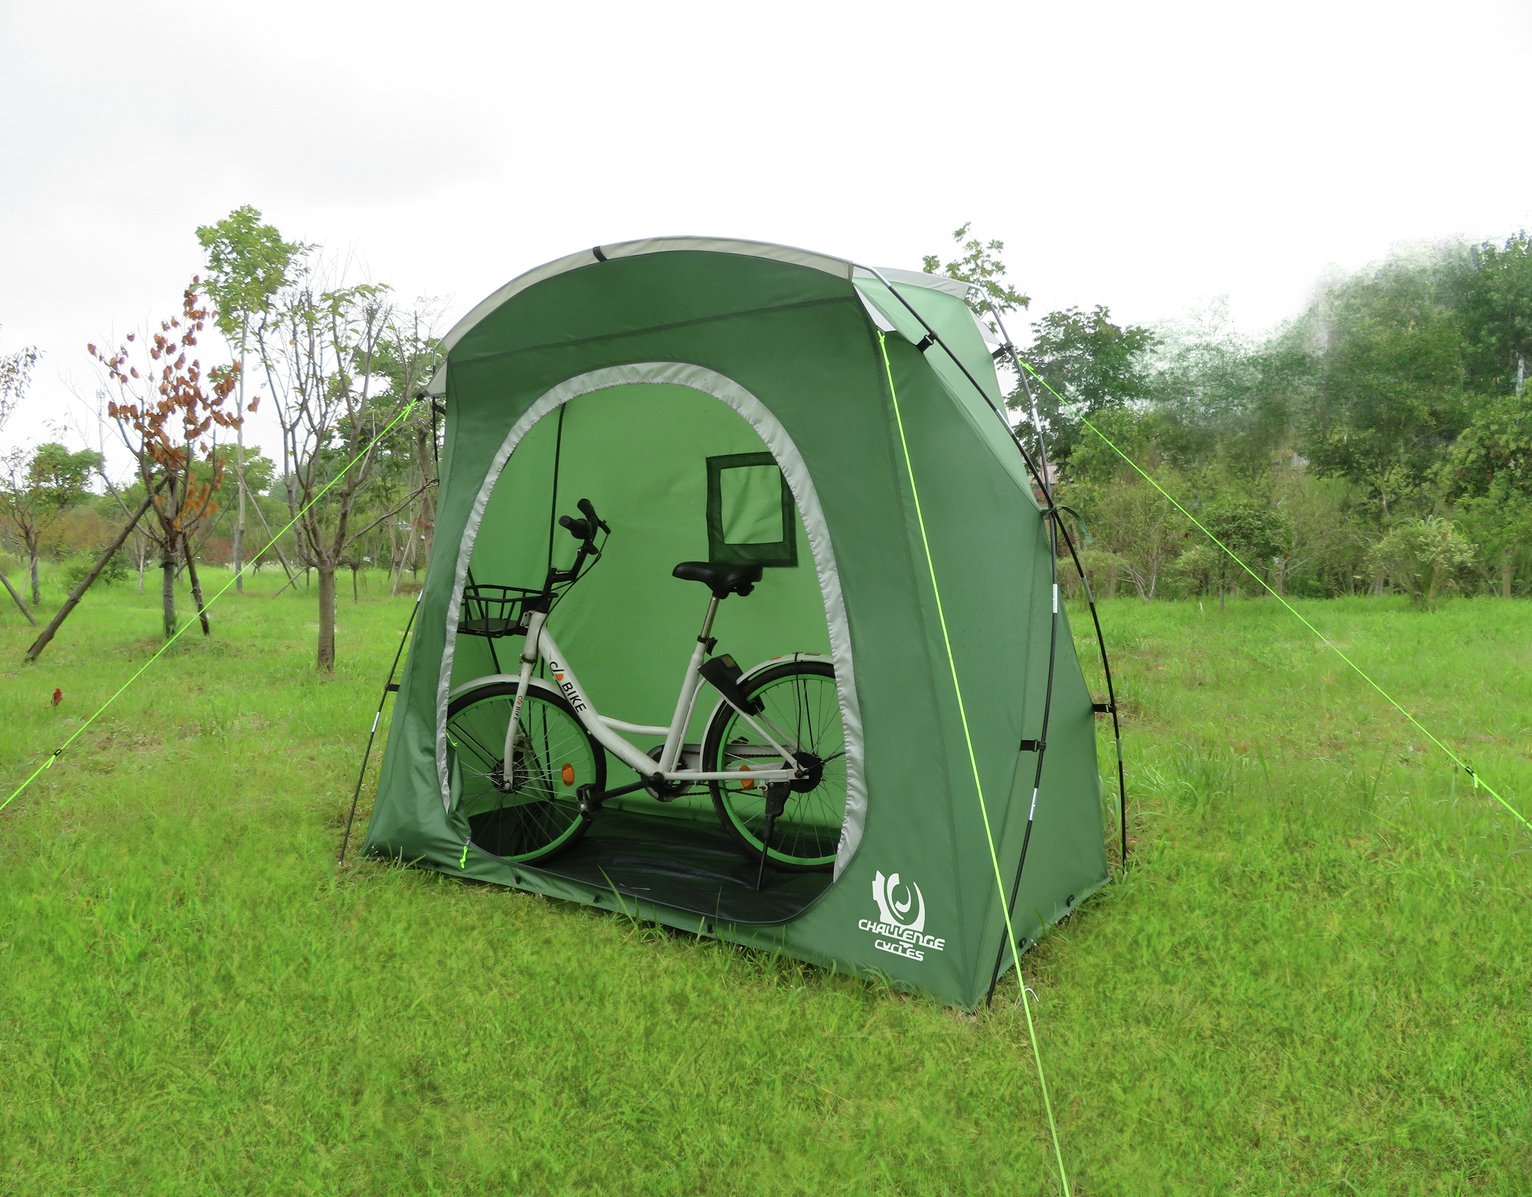 tidy tent bike cave argos